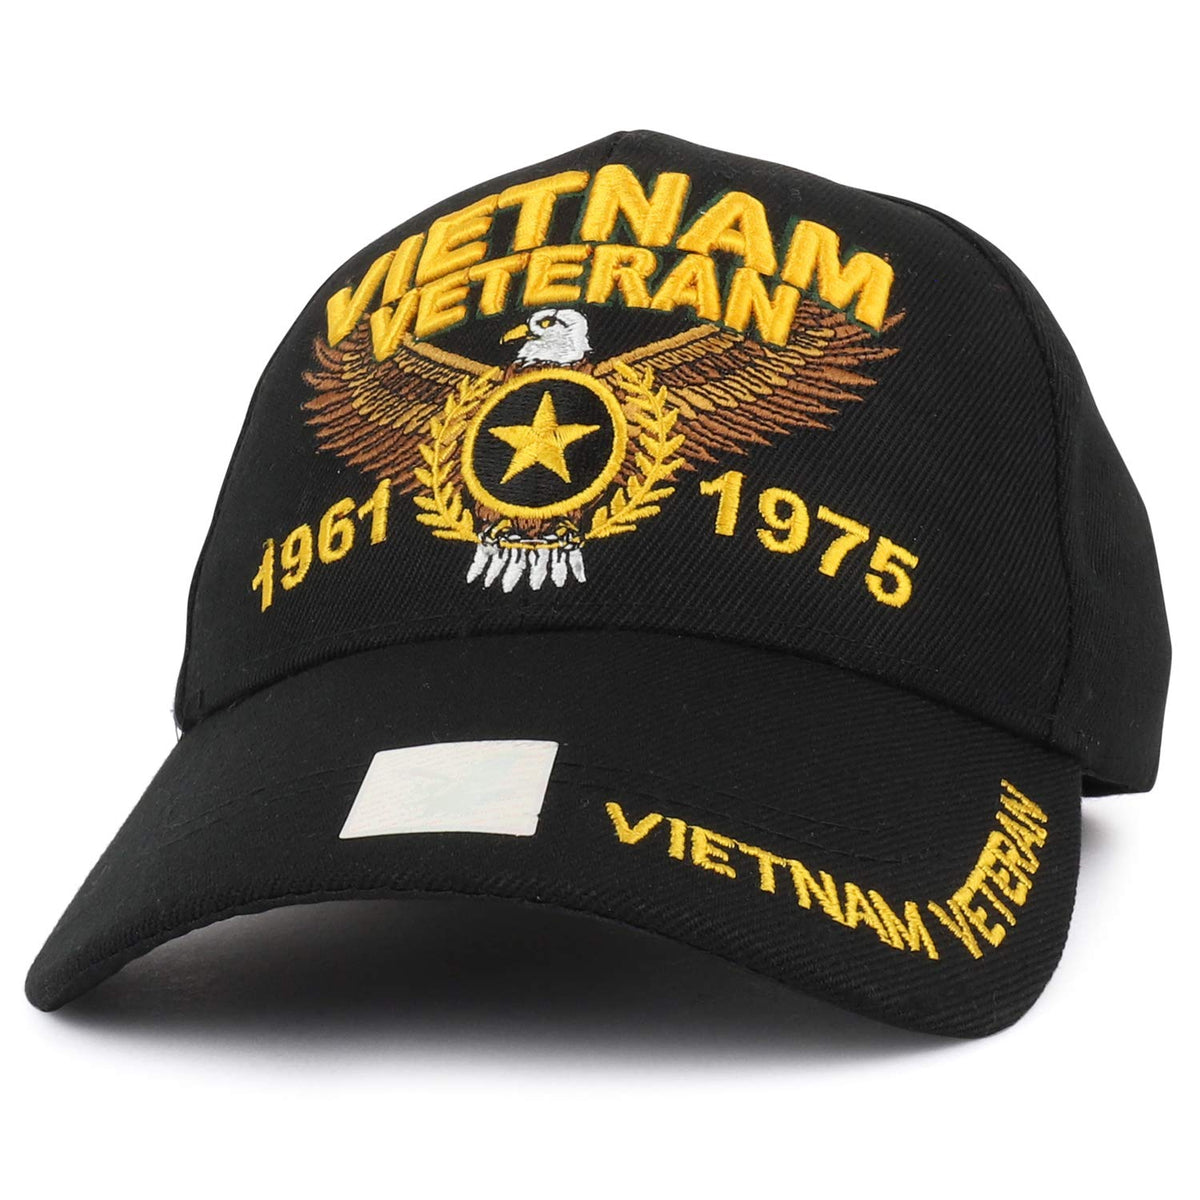 Armycrew Vietnam Veteran 1961 to 1975 Eagle Star Embroidered Baseball Cap